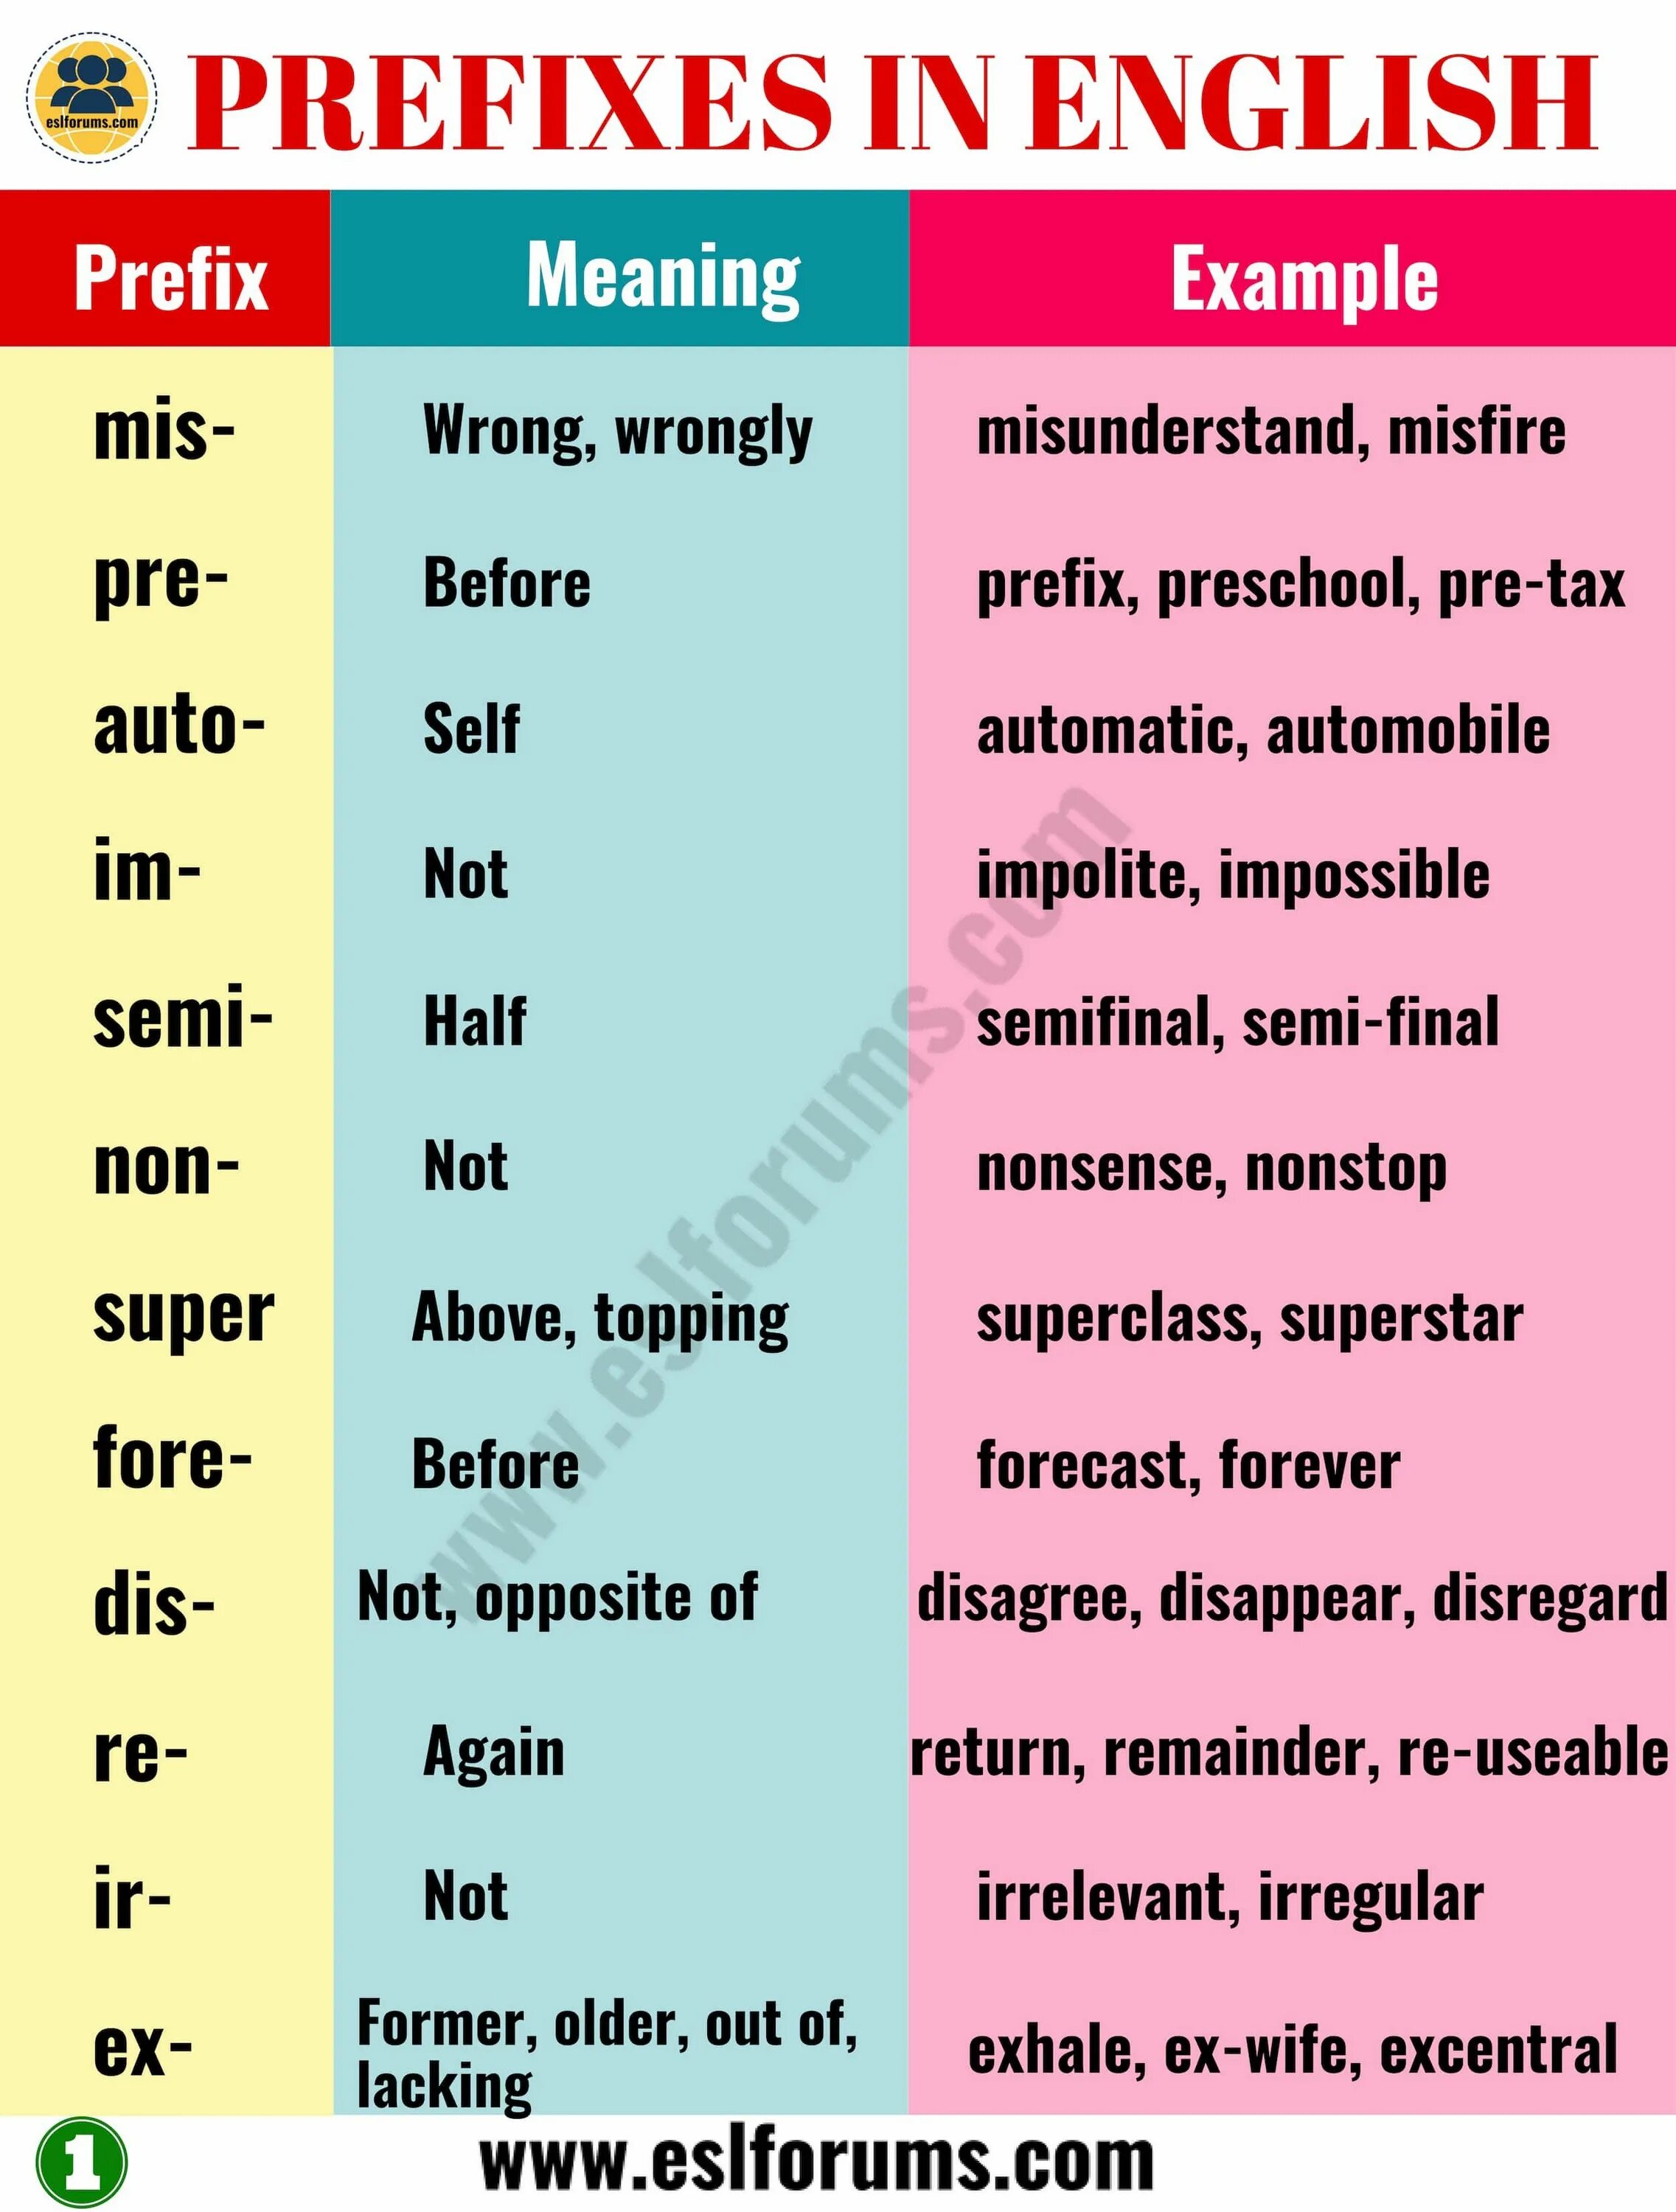 English prefixes. Префиксы в английском языке таблица. Prefix примеры. Префикс en в английском. Words with many meanings